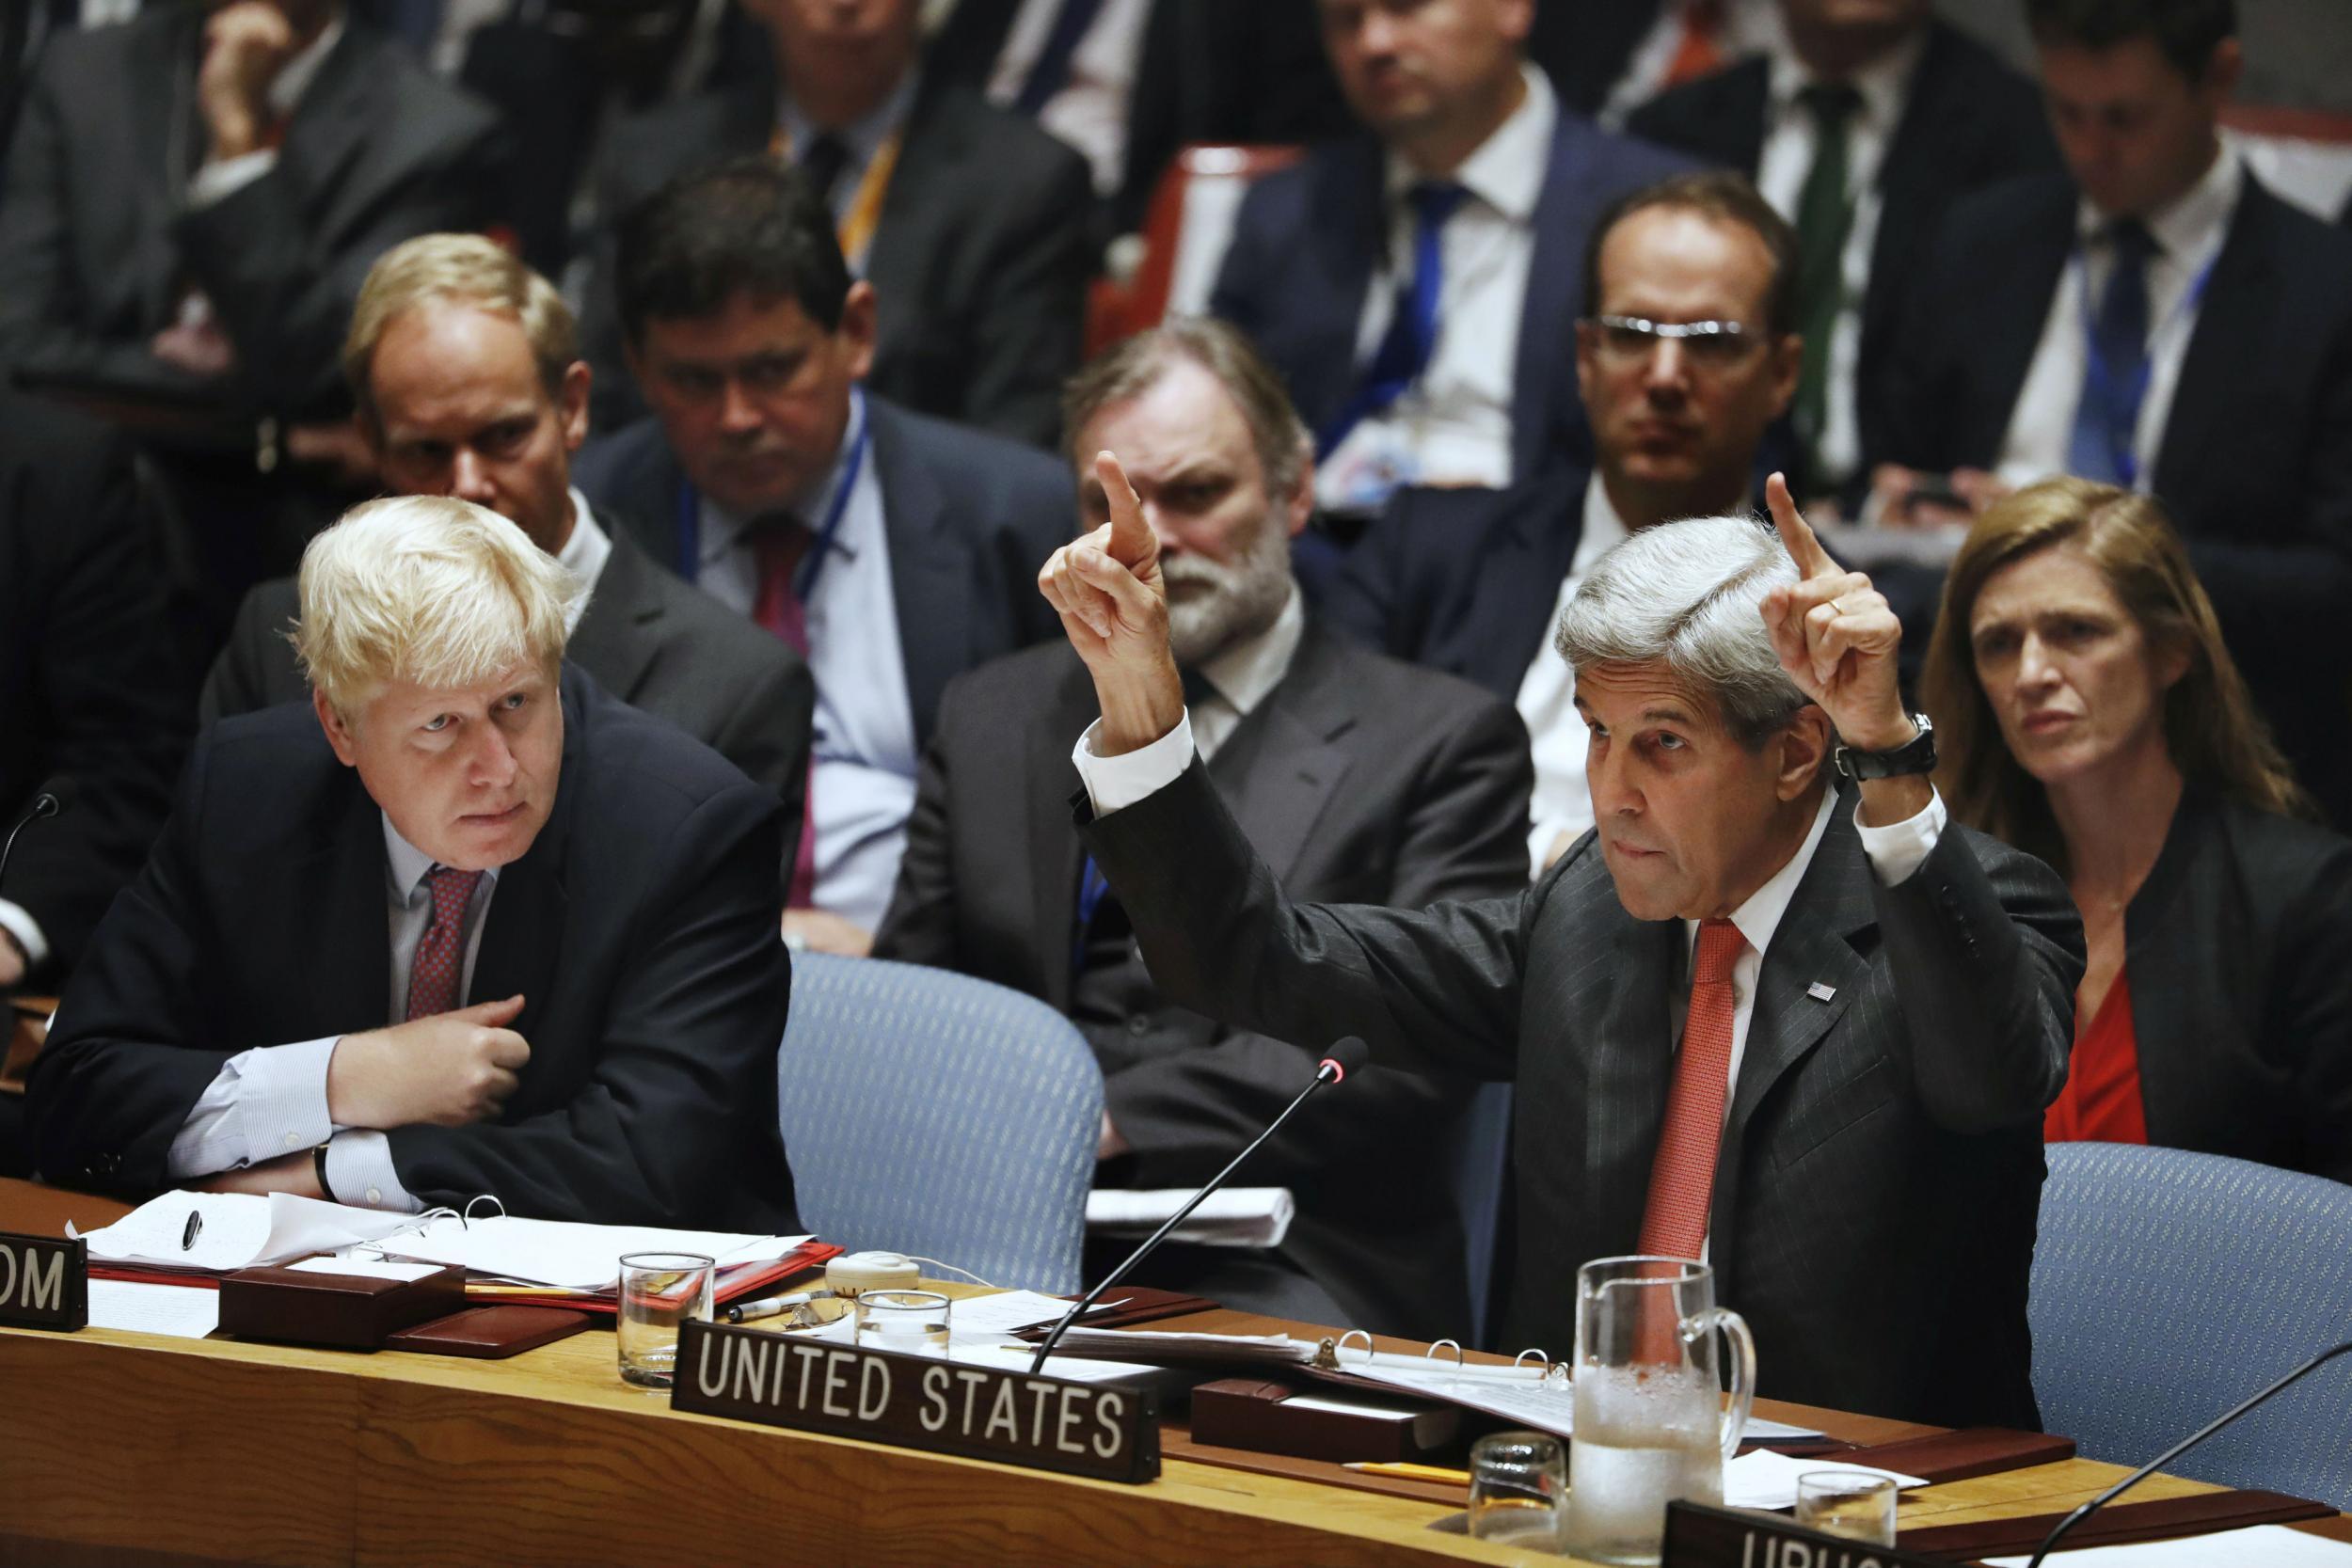 Kerry speaking in New York as UK Foreign Secretary Boris Johnson looks on